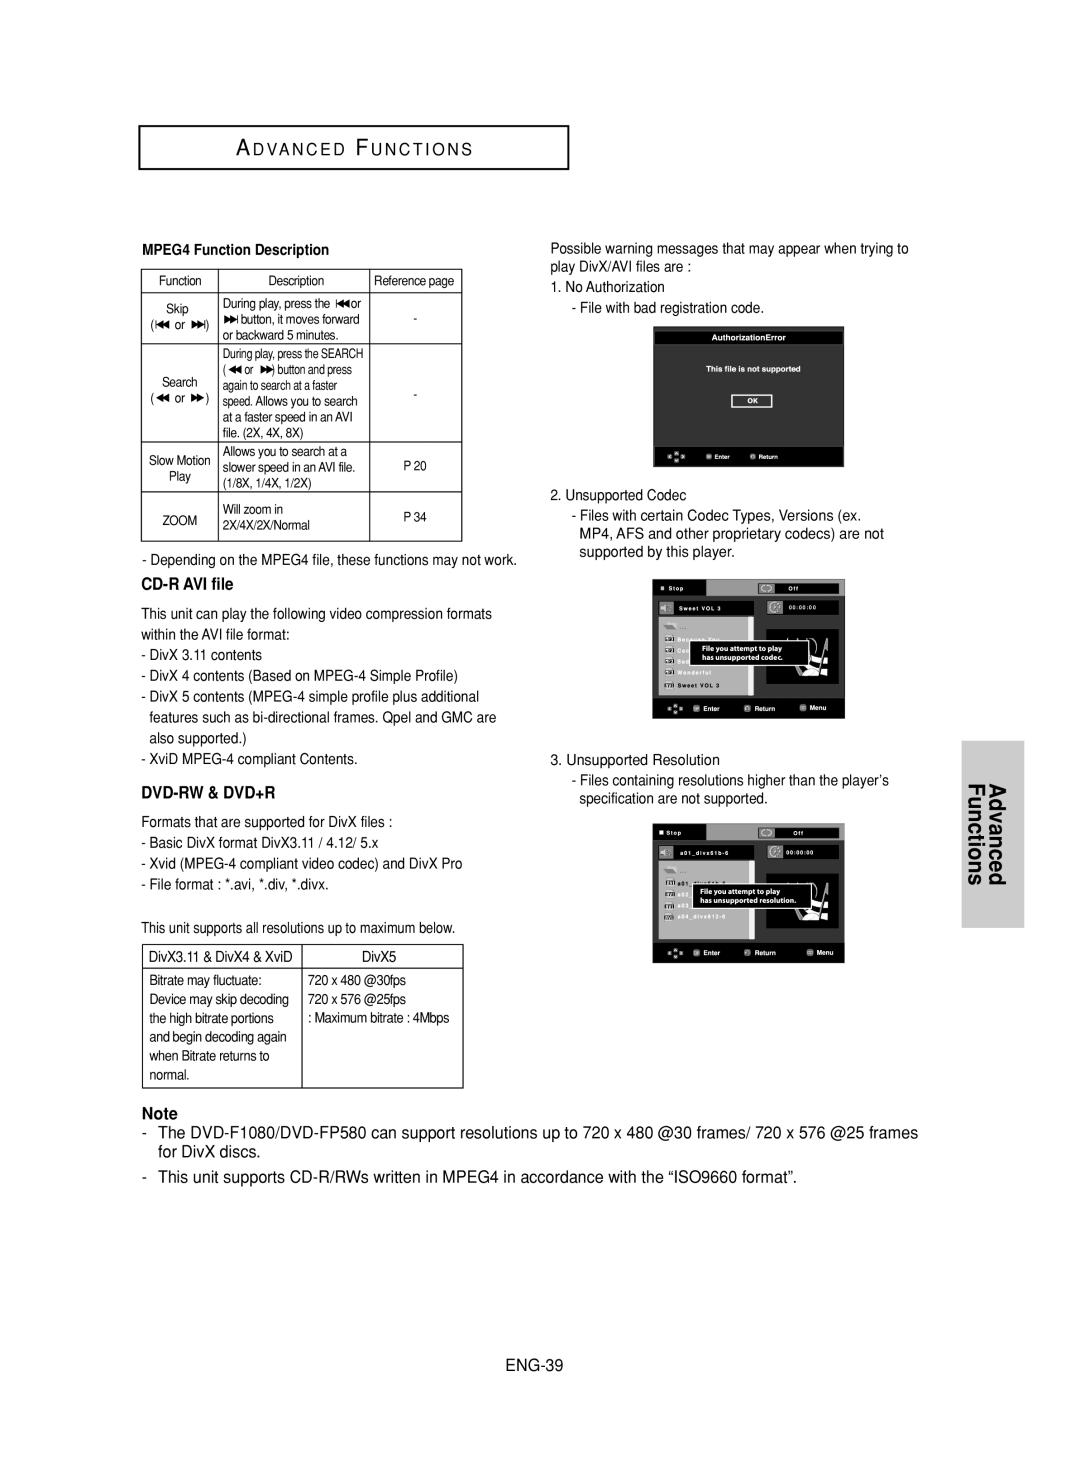 Samsung DVD-F1080, DVD-FP580 Advanced Functions, A D Va N C E D F U N C T I O N S, CD-R AVI file, Dvd-Rw & Dvd+R, ENG-39 